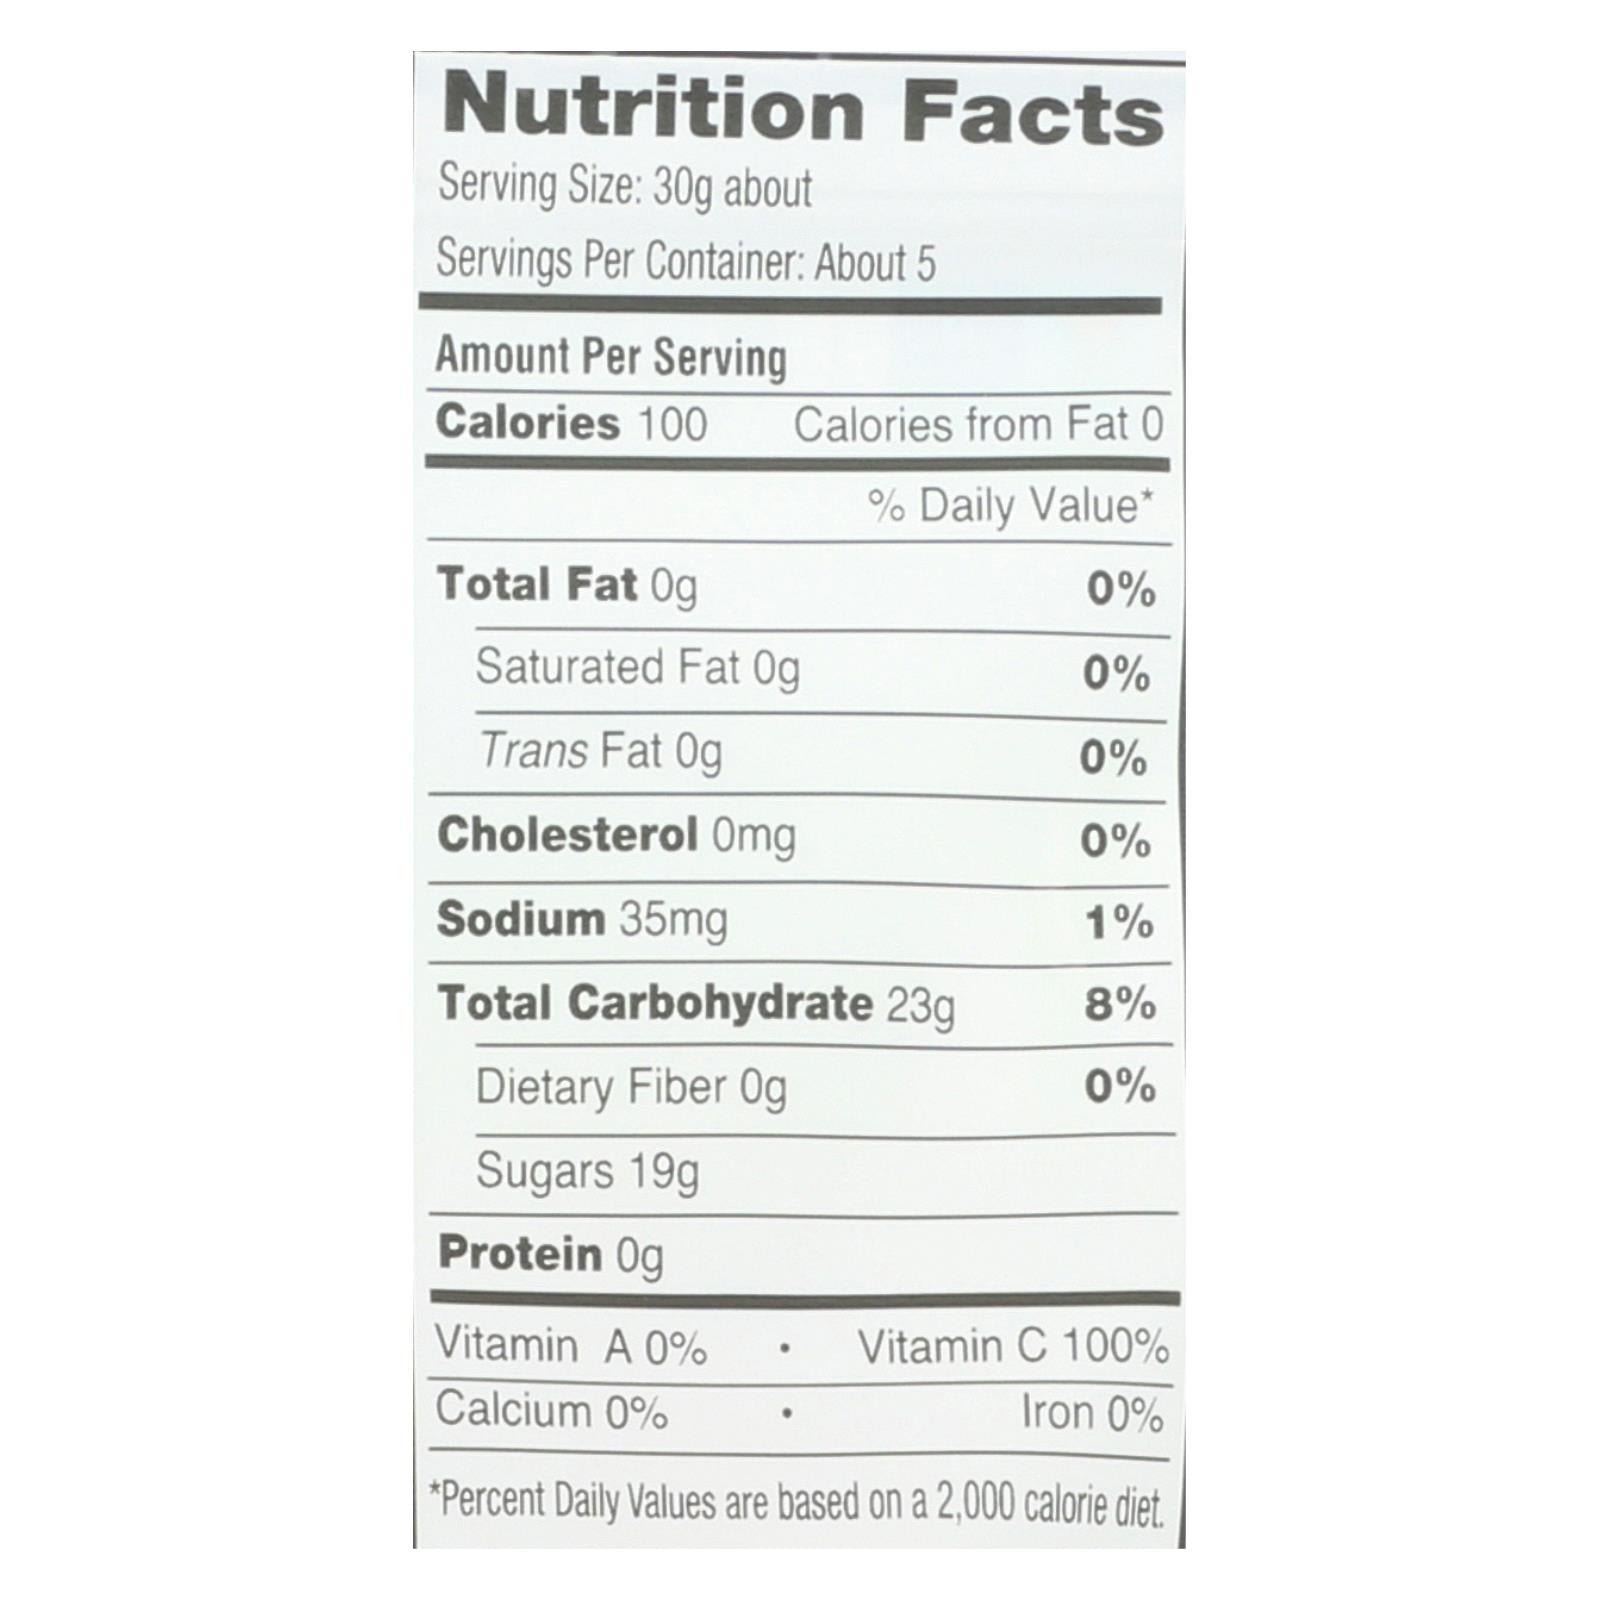 Yumearth Organics - Organic Fruit Snack - 4 Flavors - Case of 6 - 5 oz.